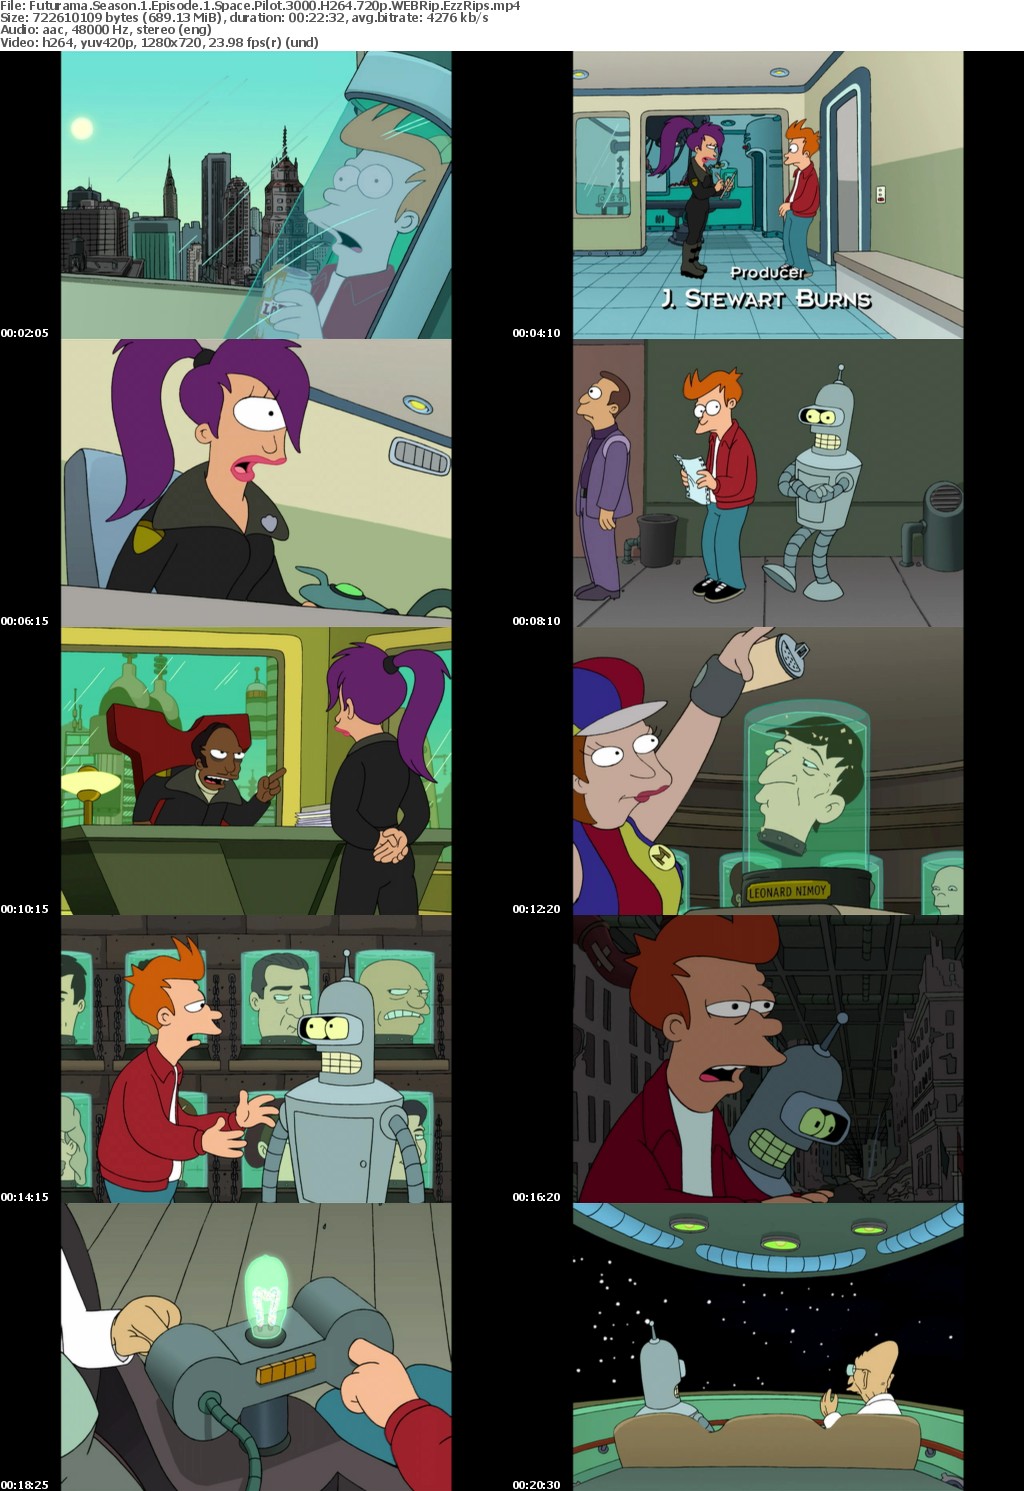 Futurama Season 1 Episode 1 Space Pilot 3000 H264 720p WEBRip EzzRips